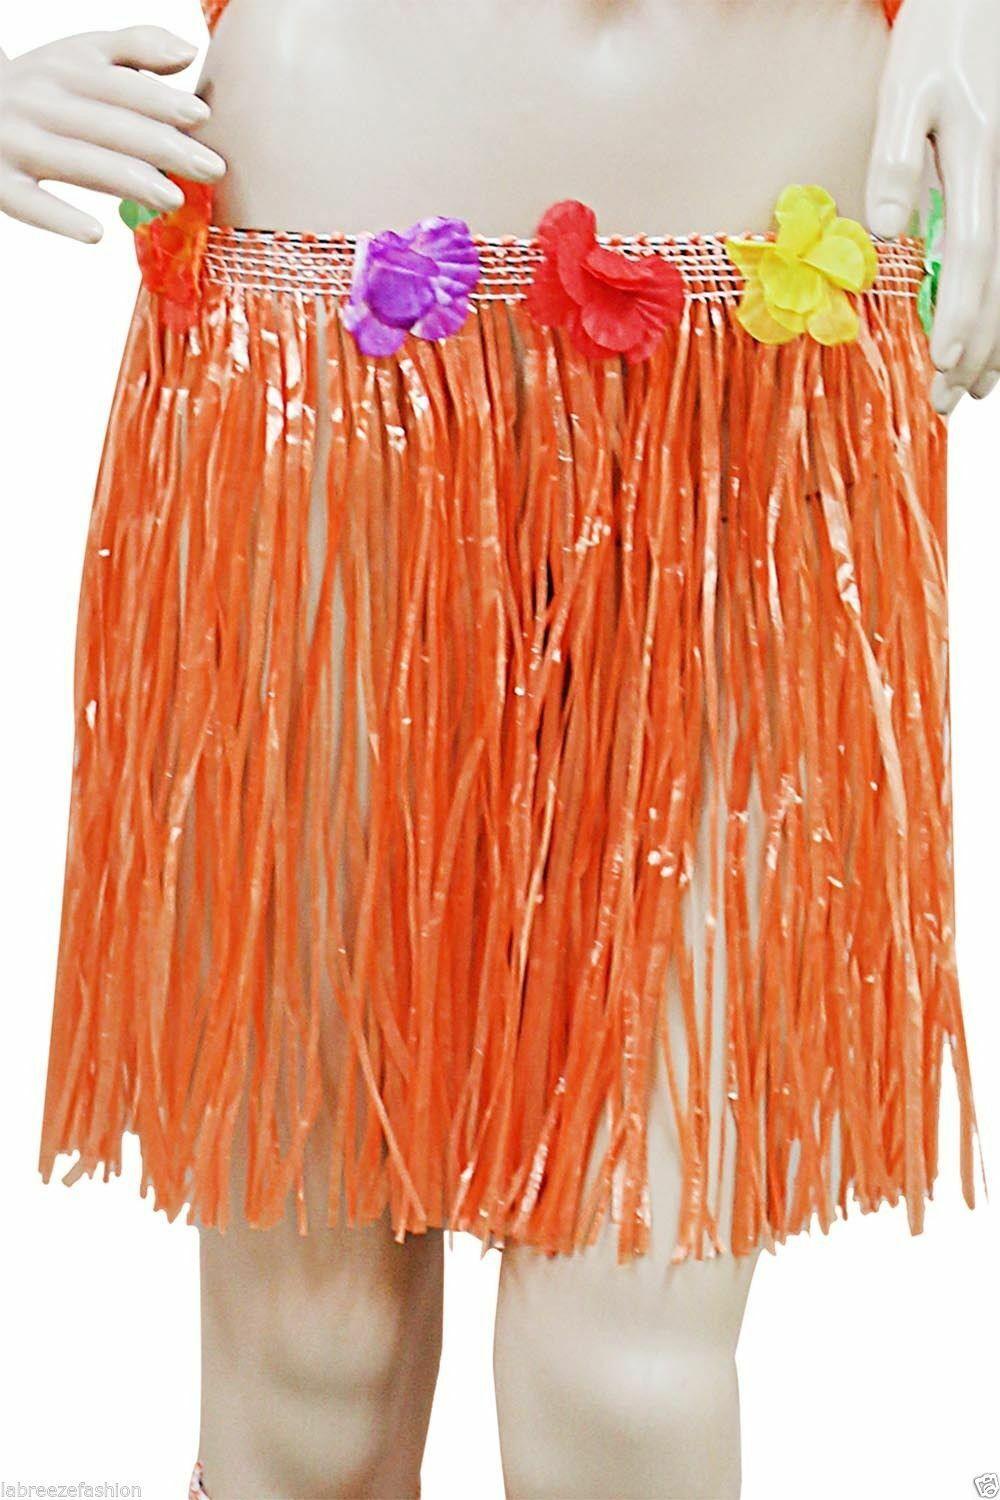 New Ladies Hawaiian Hula Skirt with Flowers 40cm Fancy Dress Costume - Labreeze